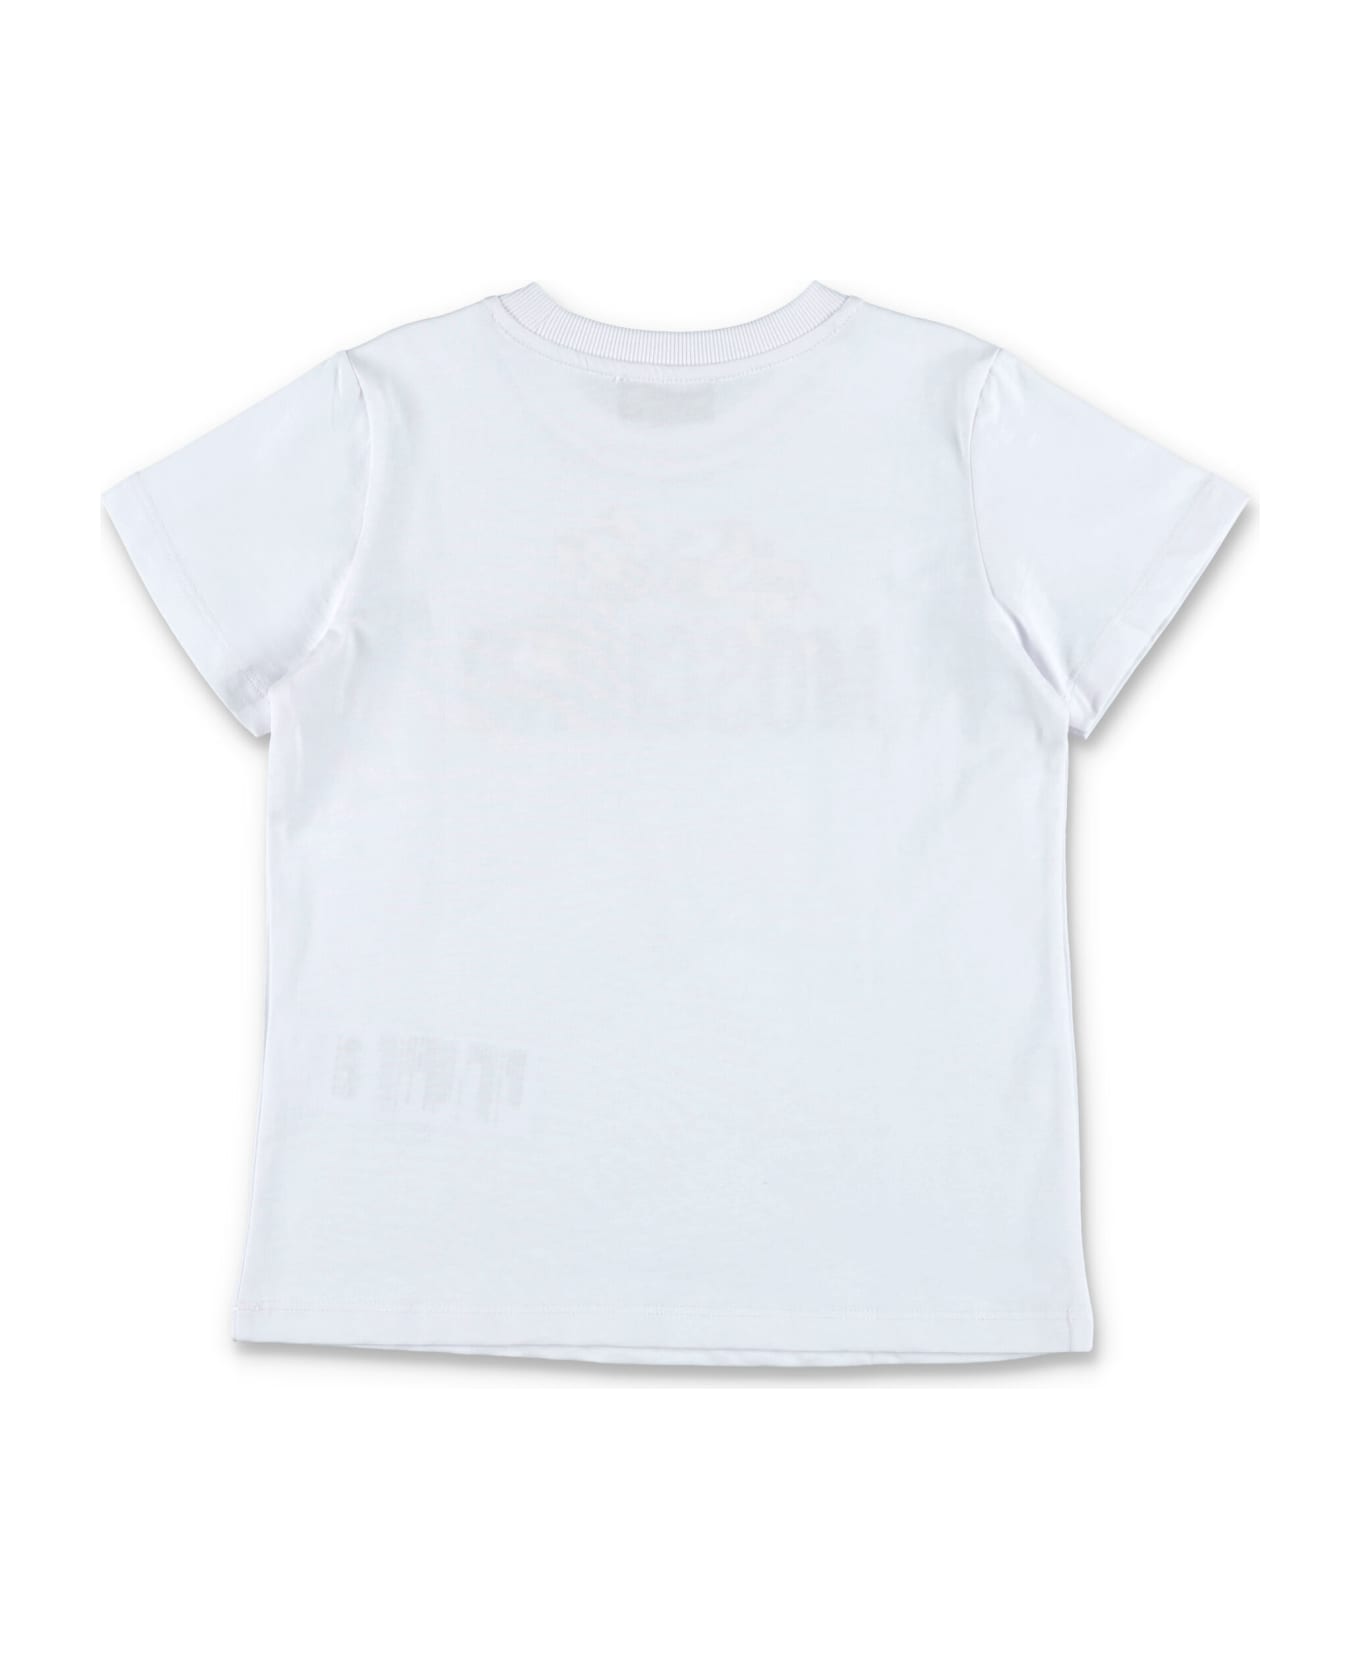 Moschino Tee Logo Bear - WHITE Tシャツ＆ポロシャツ